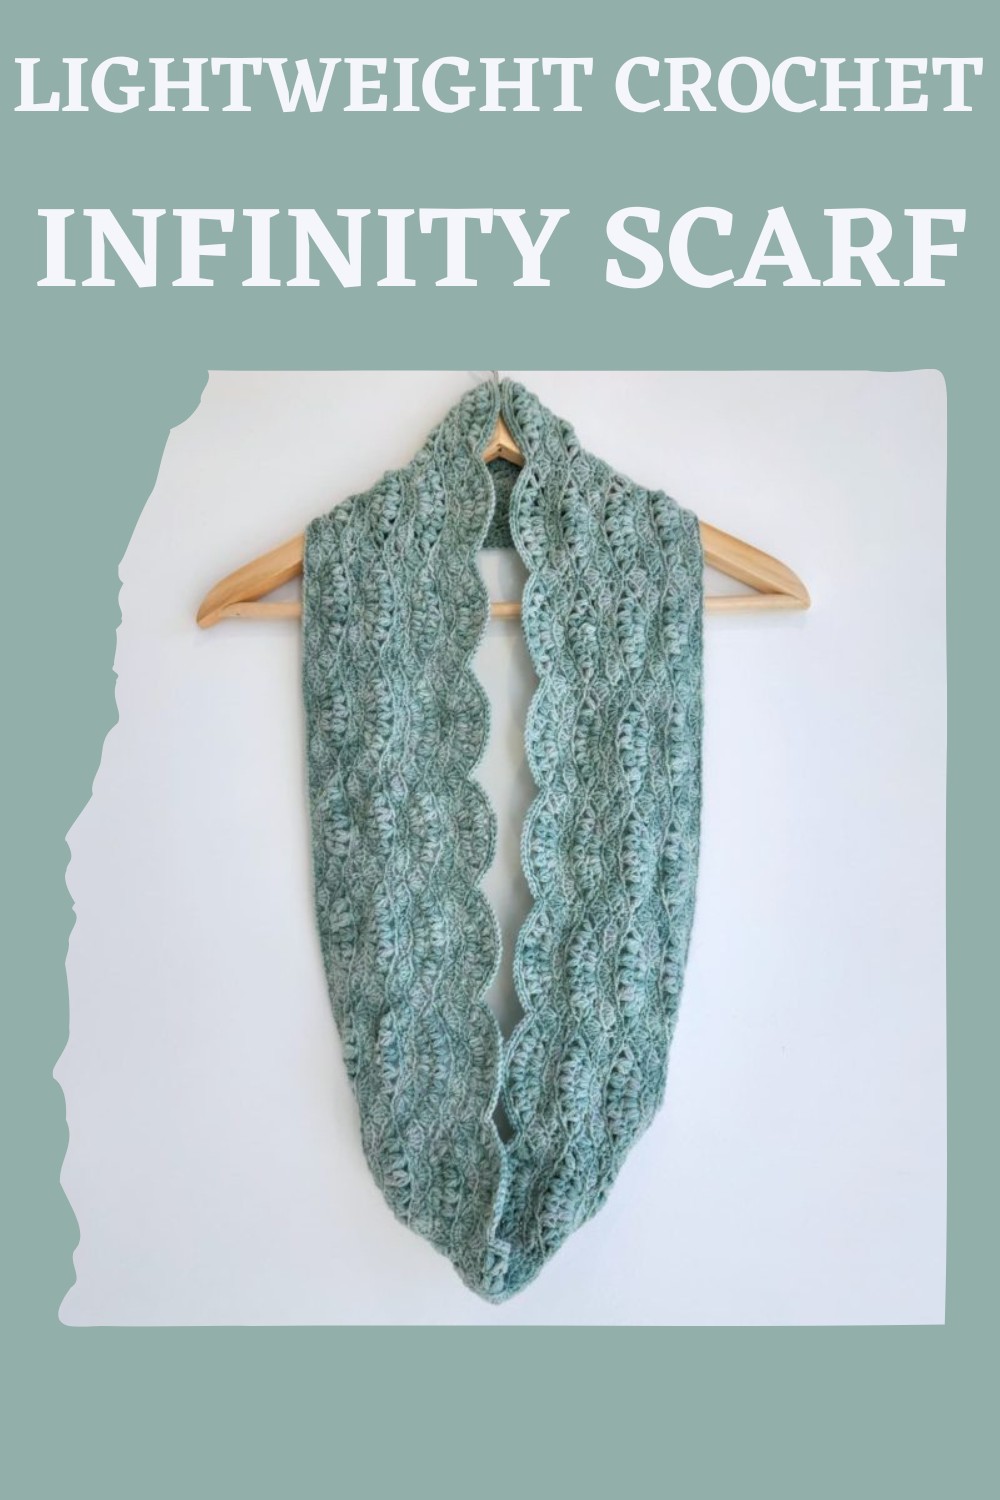 Lightweight Crochet Infinity Scarf